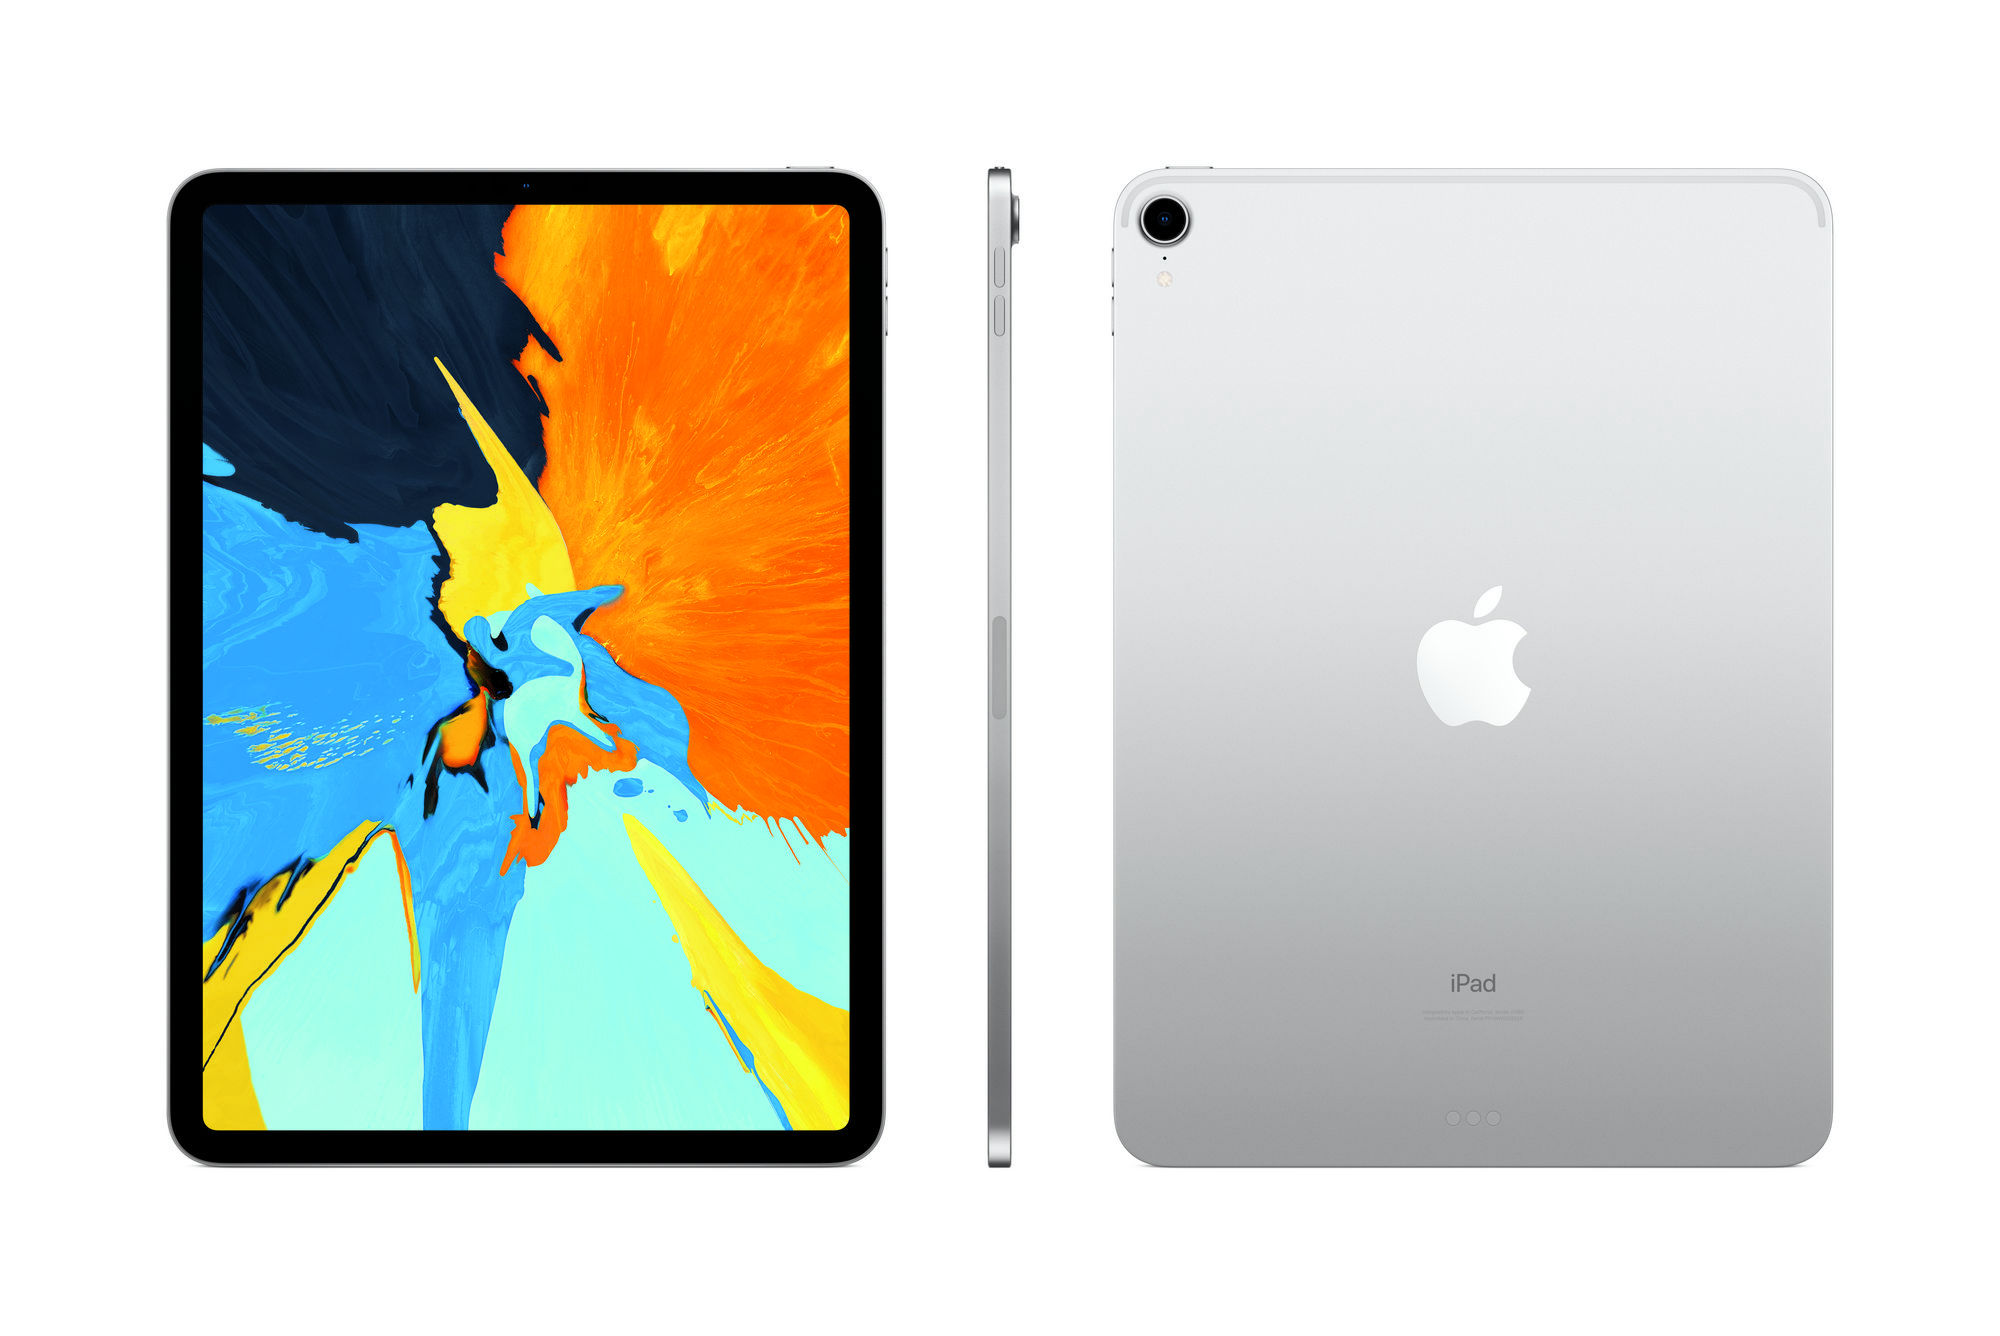 Apple iPad Pro 11 2018 Wi-Fi + Cellular 256GB Silver (MU172)